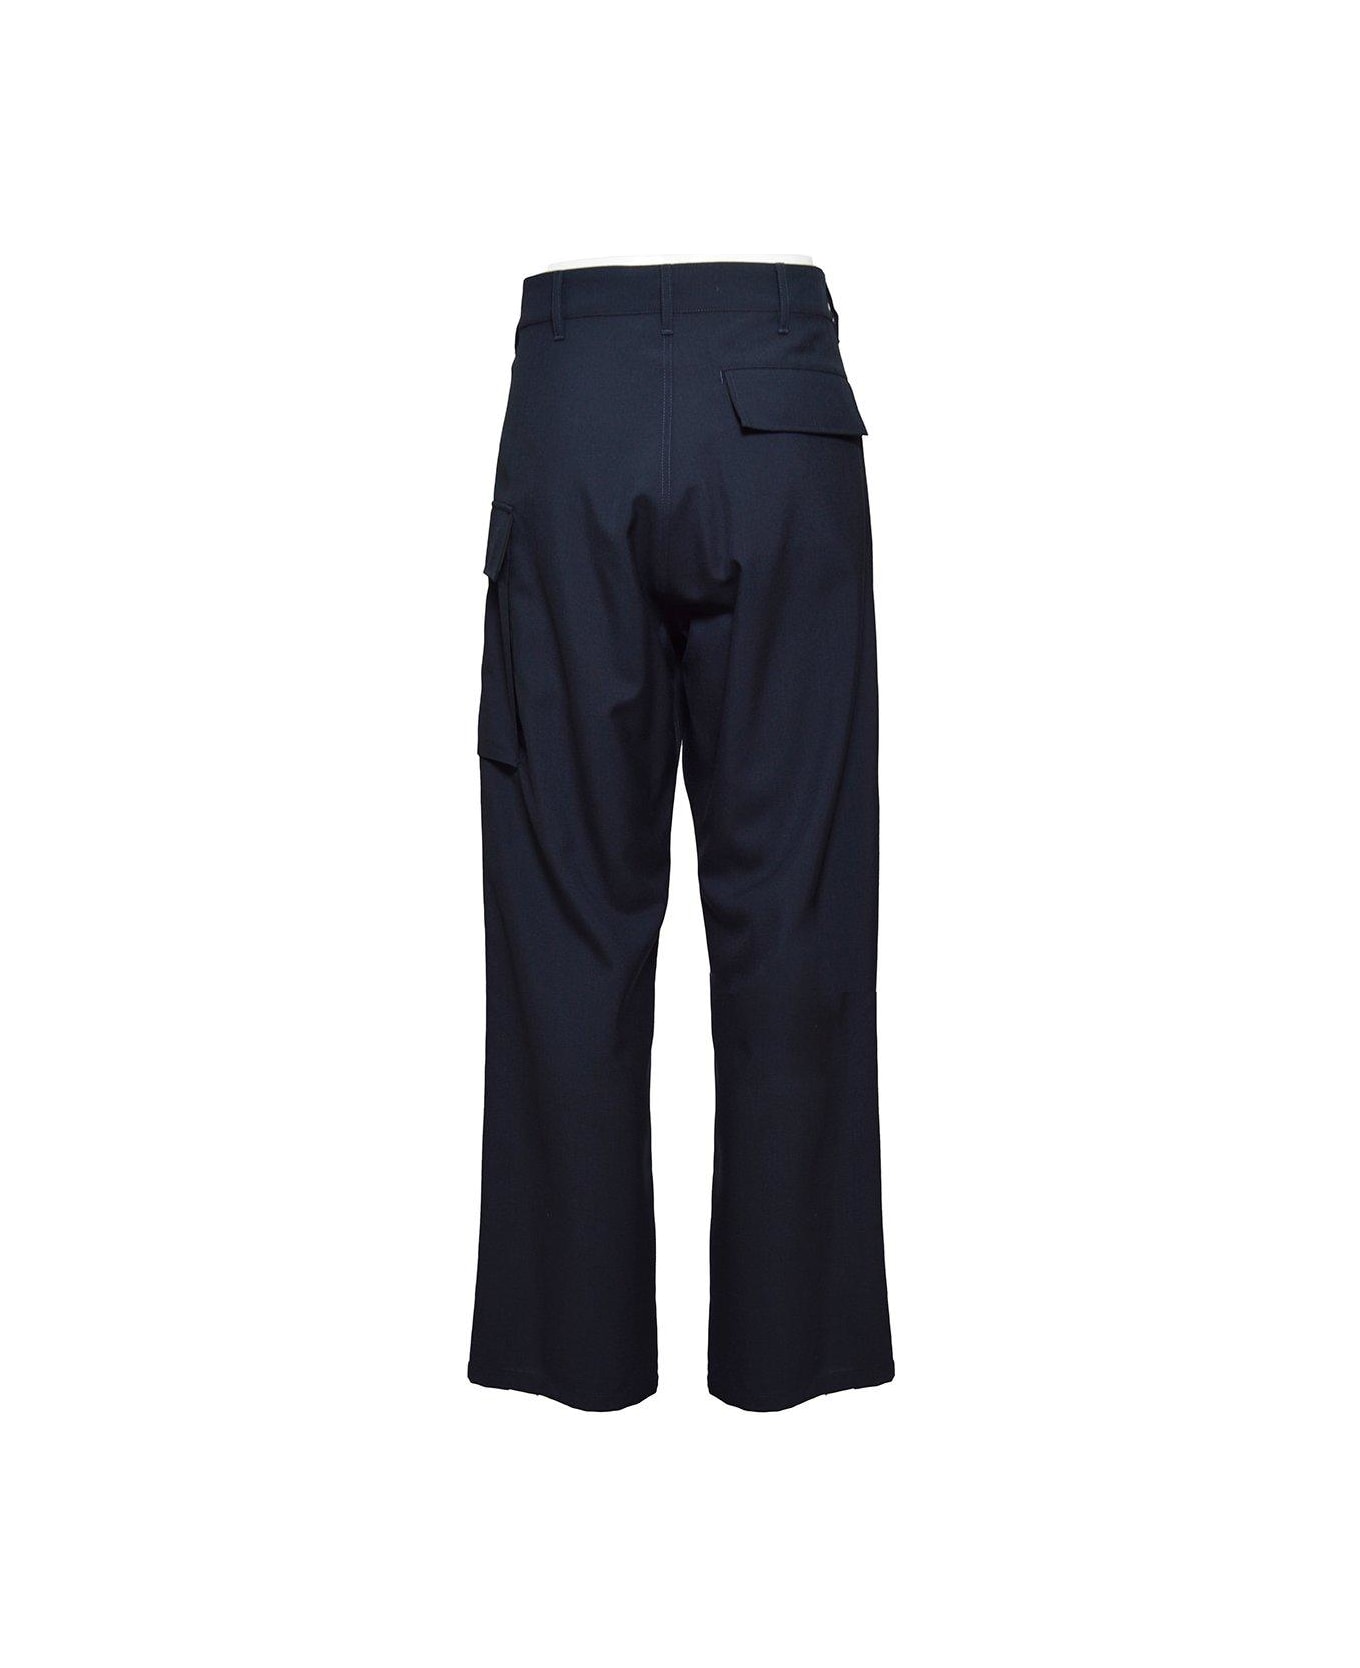 Marni Utility Pocket Mid Rise Trousers - Blu ボトムス